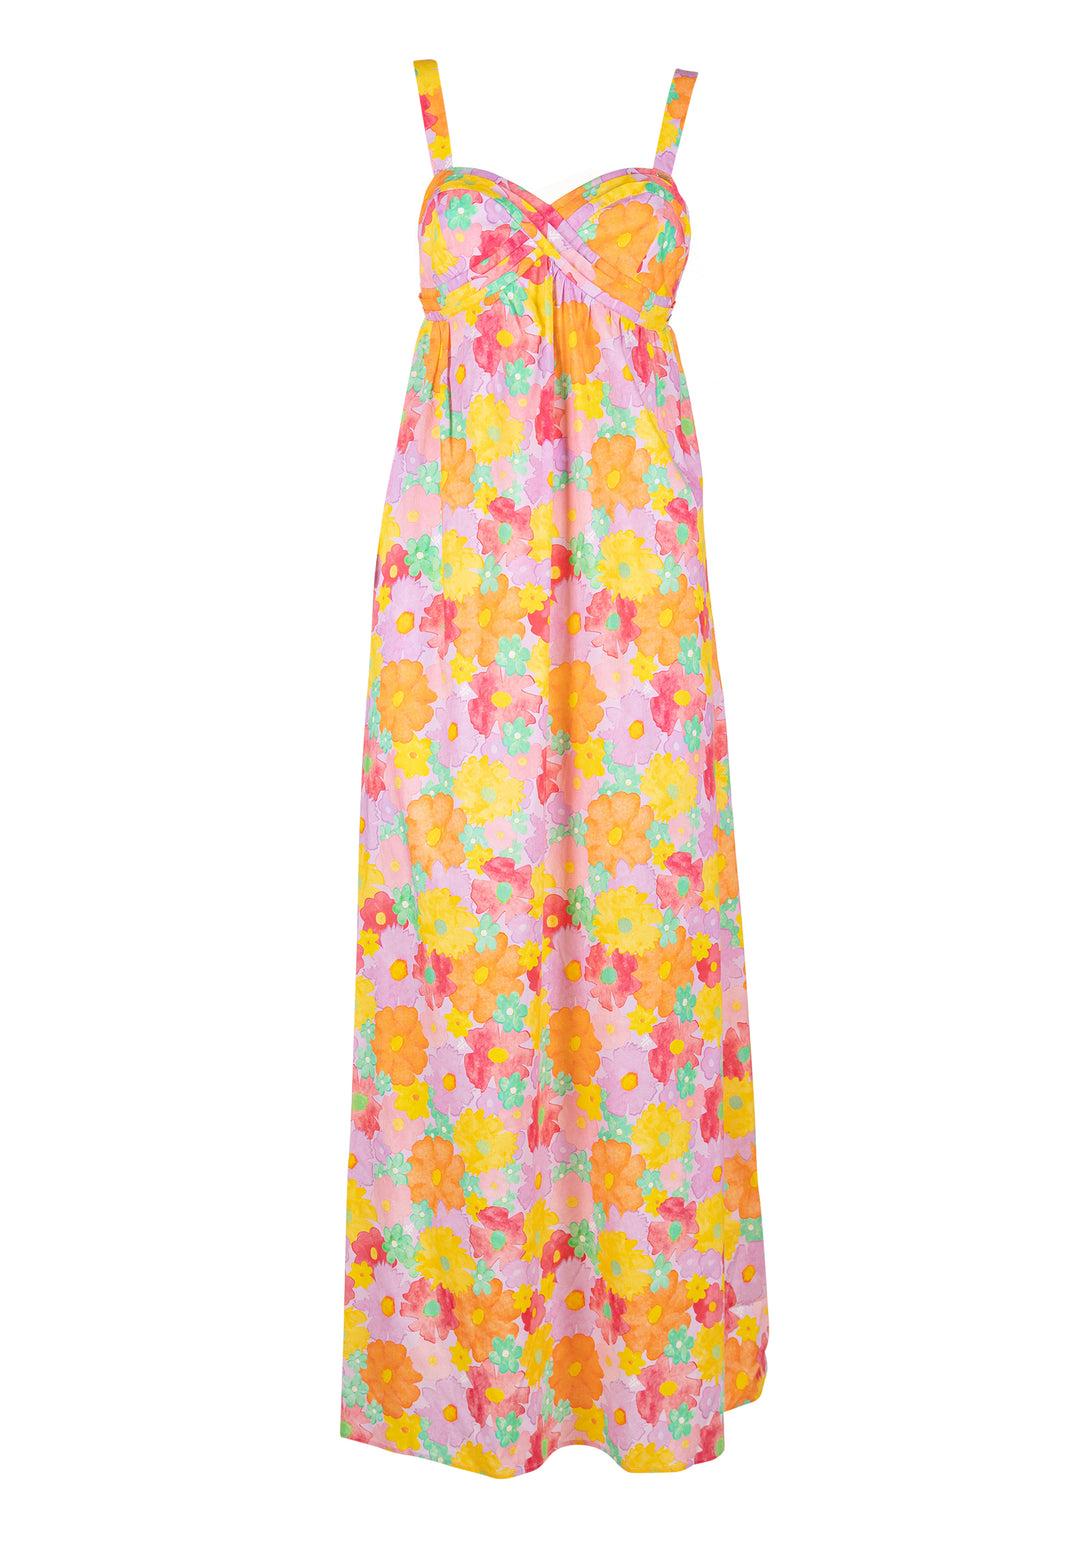 Long sleeveless dress with flowery pattern